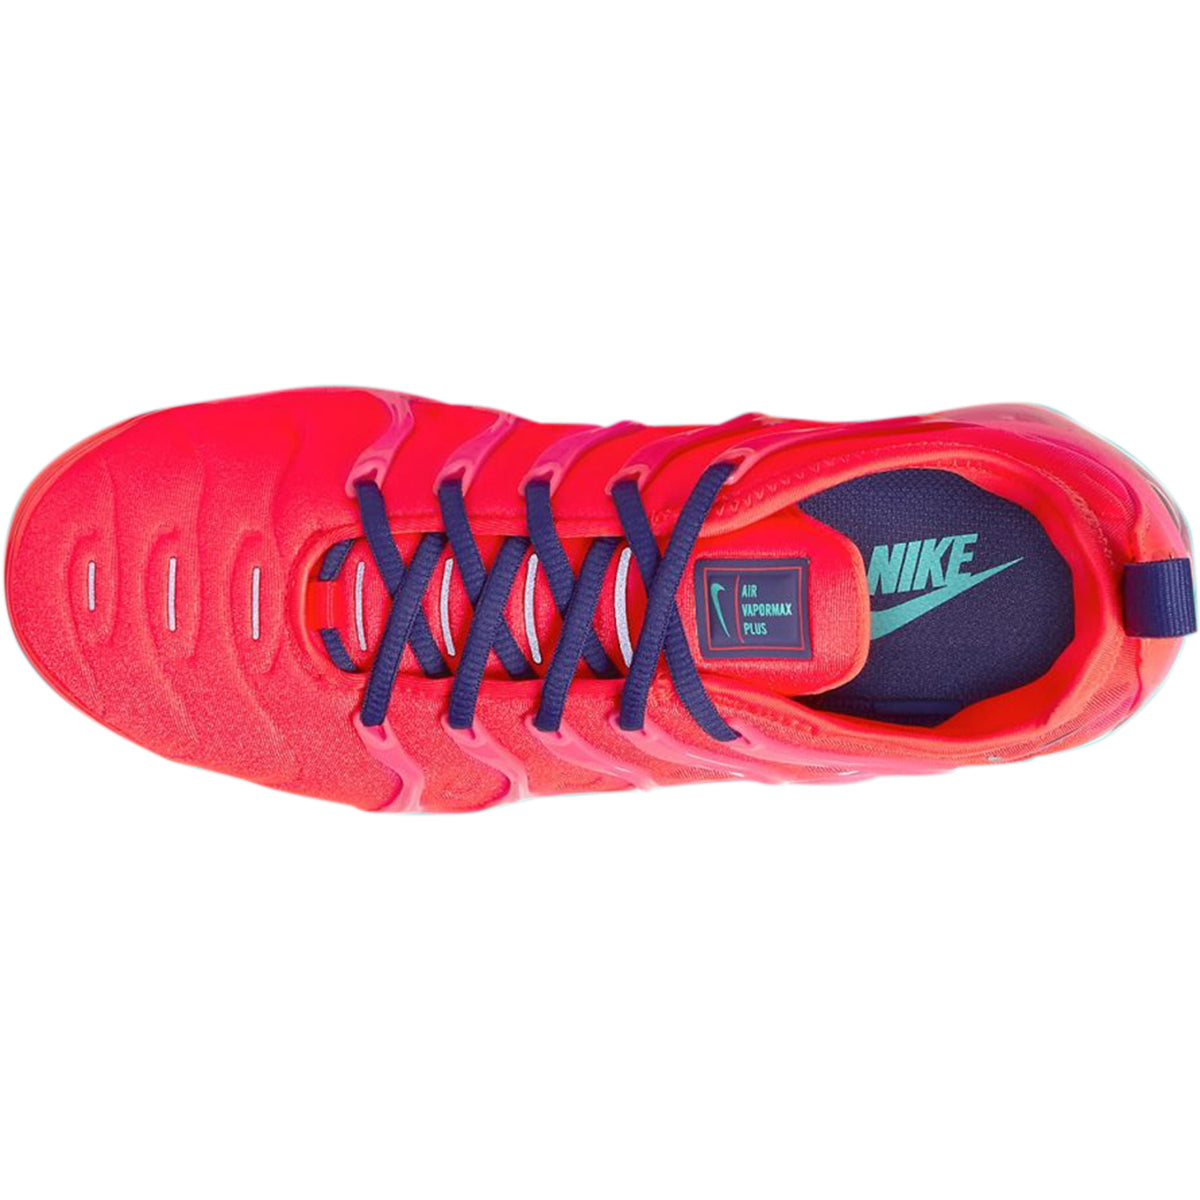 Buy Nike Air VaporMax Plus Only $ 140 Today RunRepeat